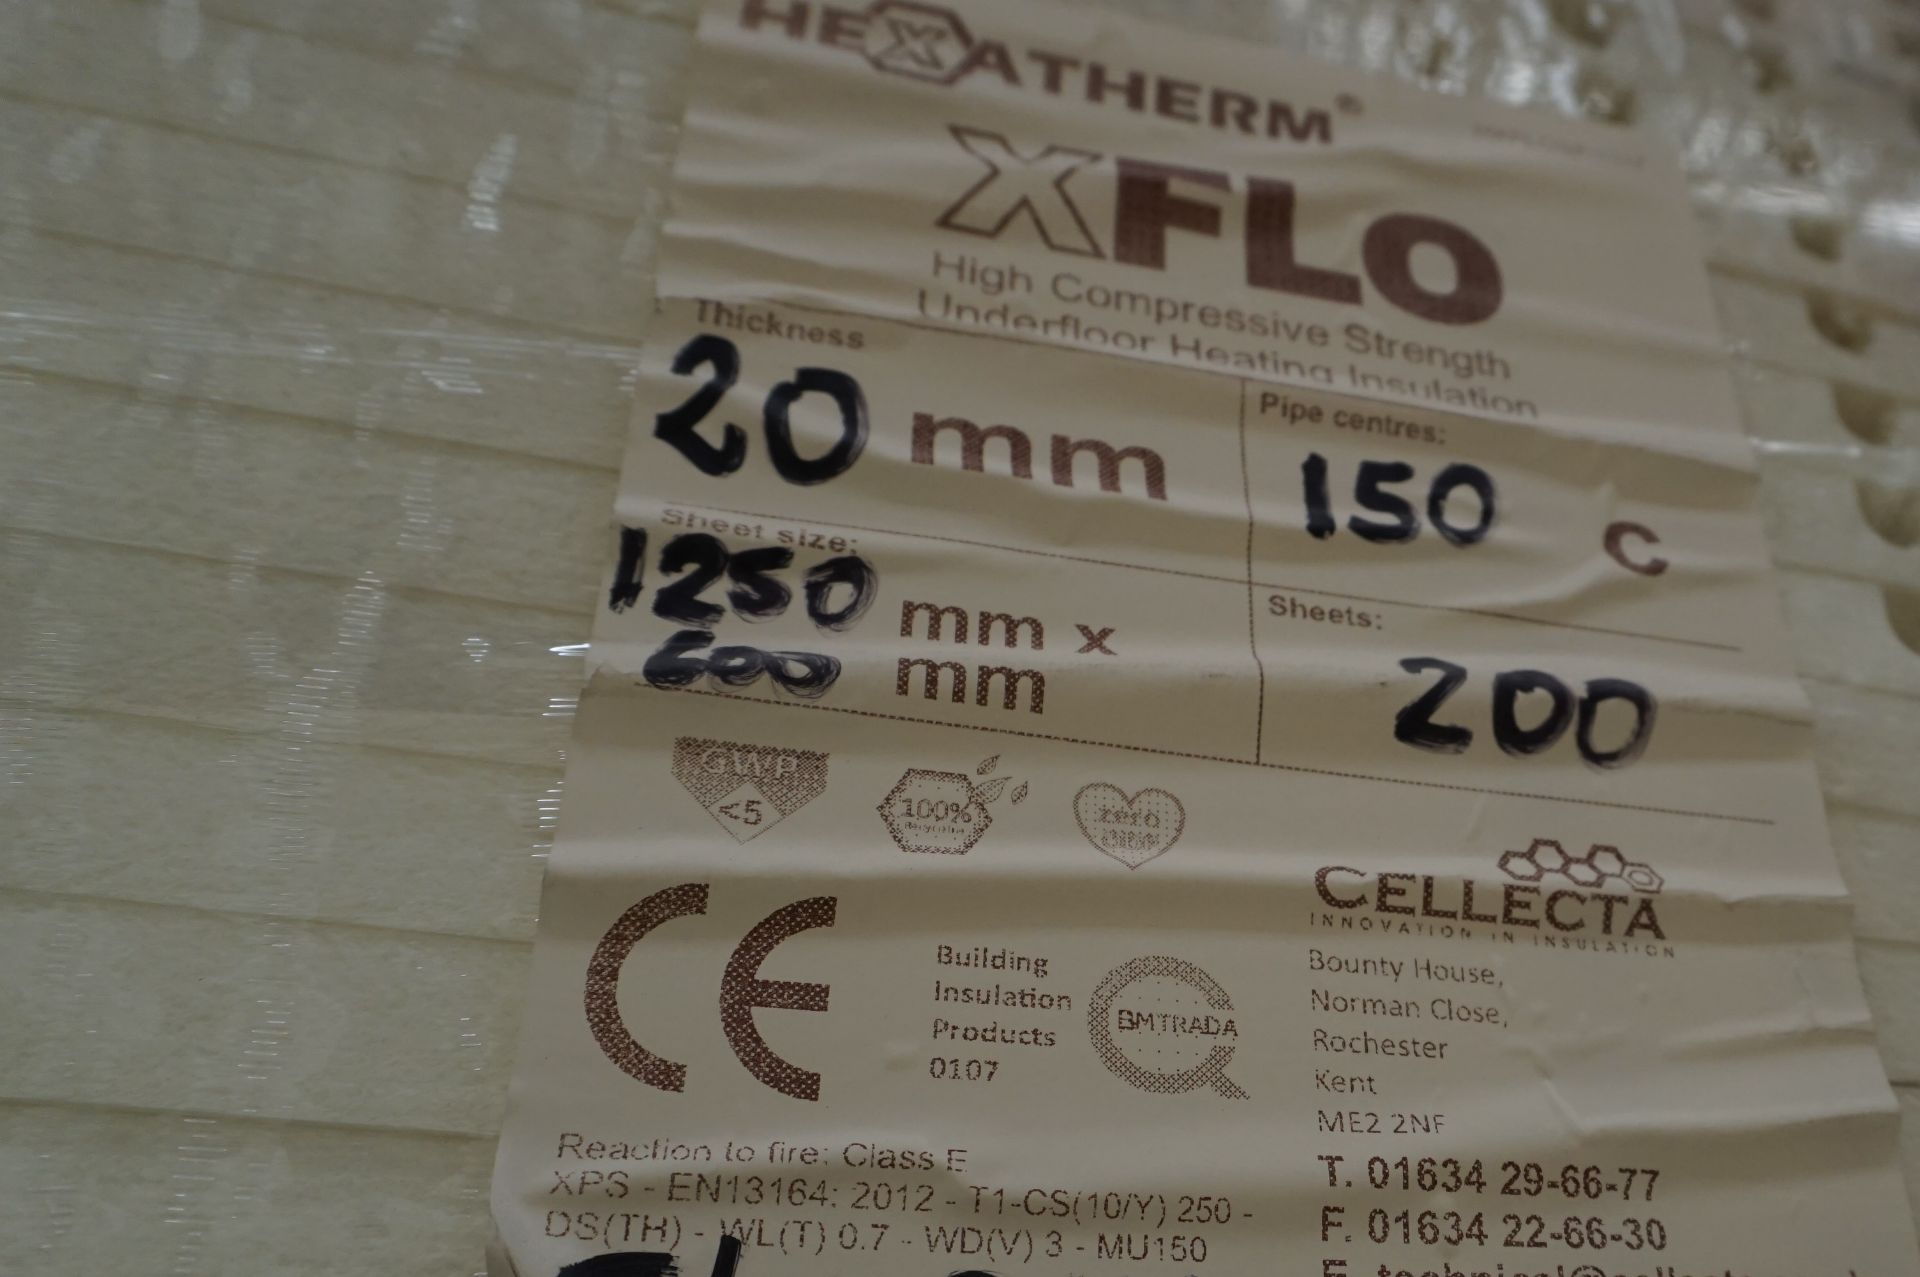 200x (no.) Cellecta, Hexatherm XFLO high compressive strength underfloor heating insulation - Image 3 of 5